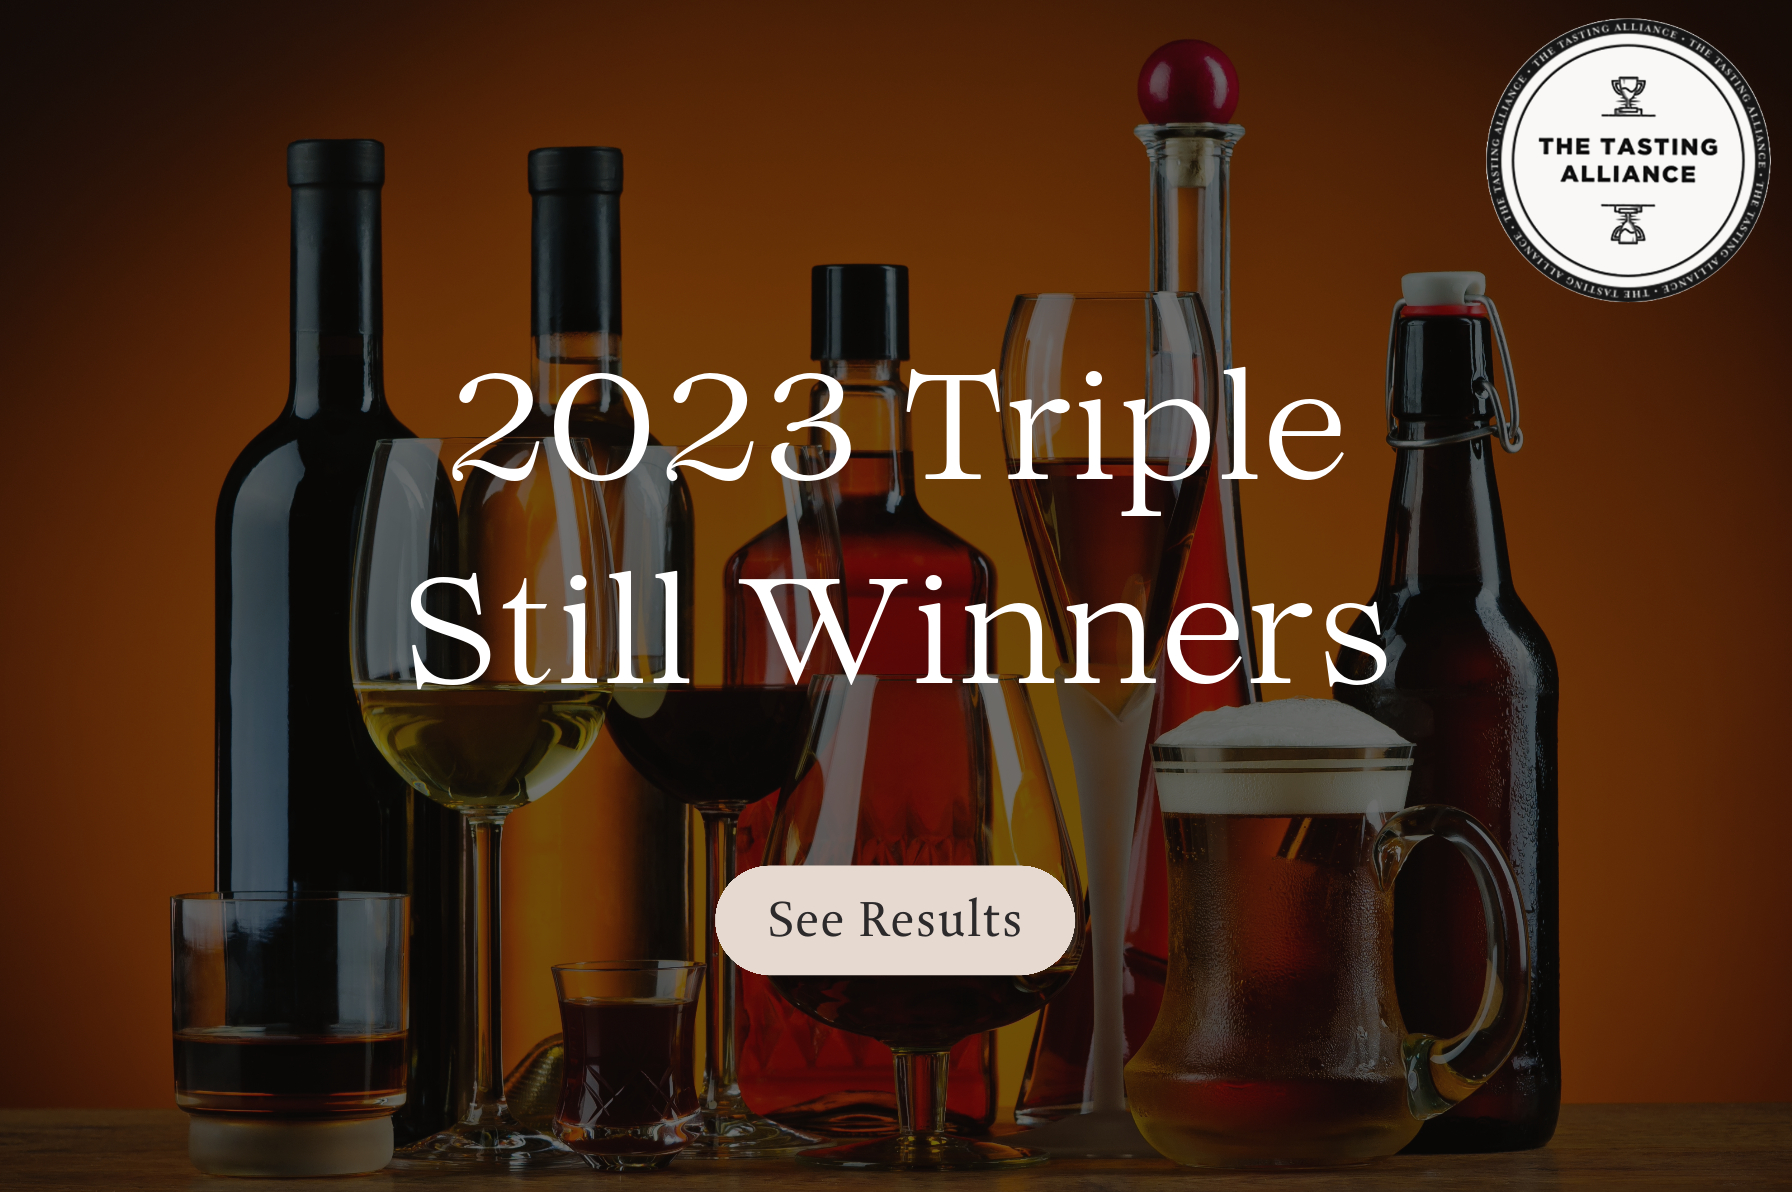 The Tasting Alliance's 2023 Triple Still Winners Results